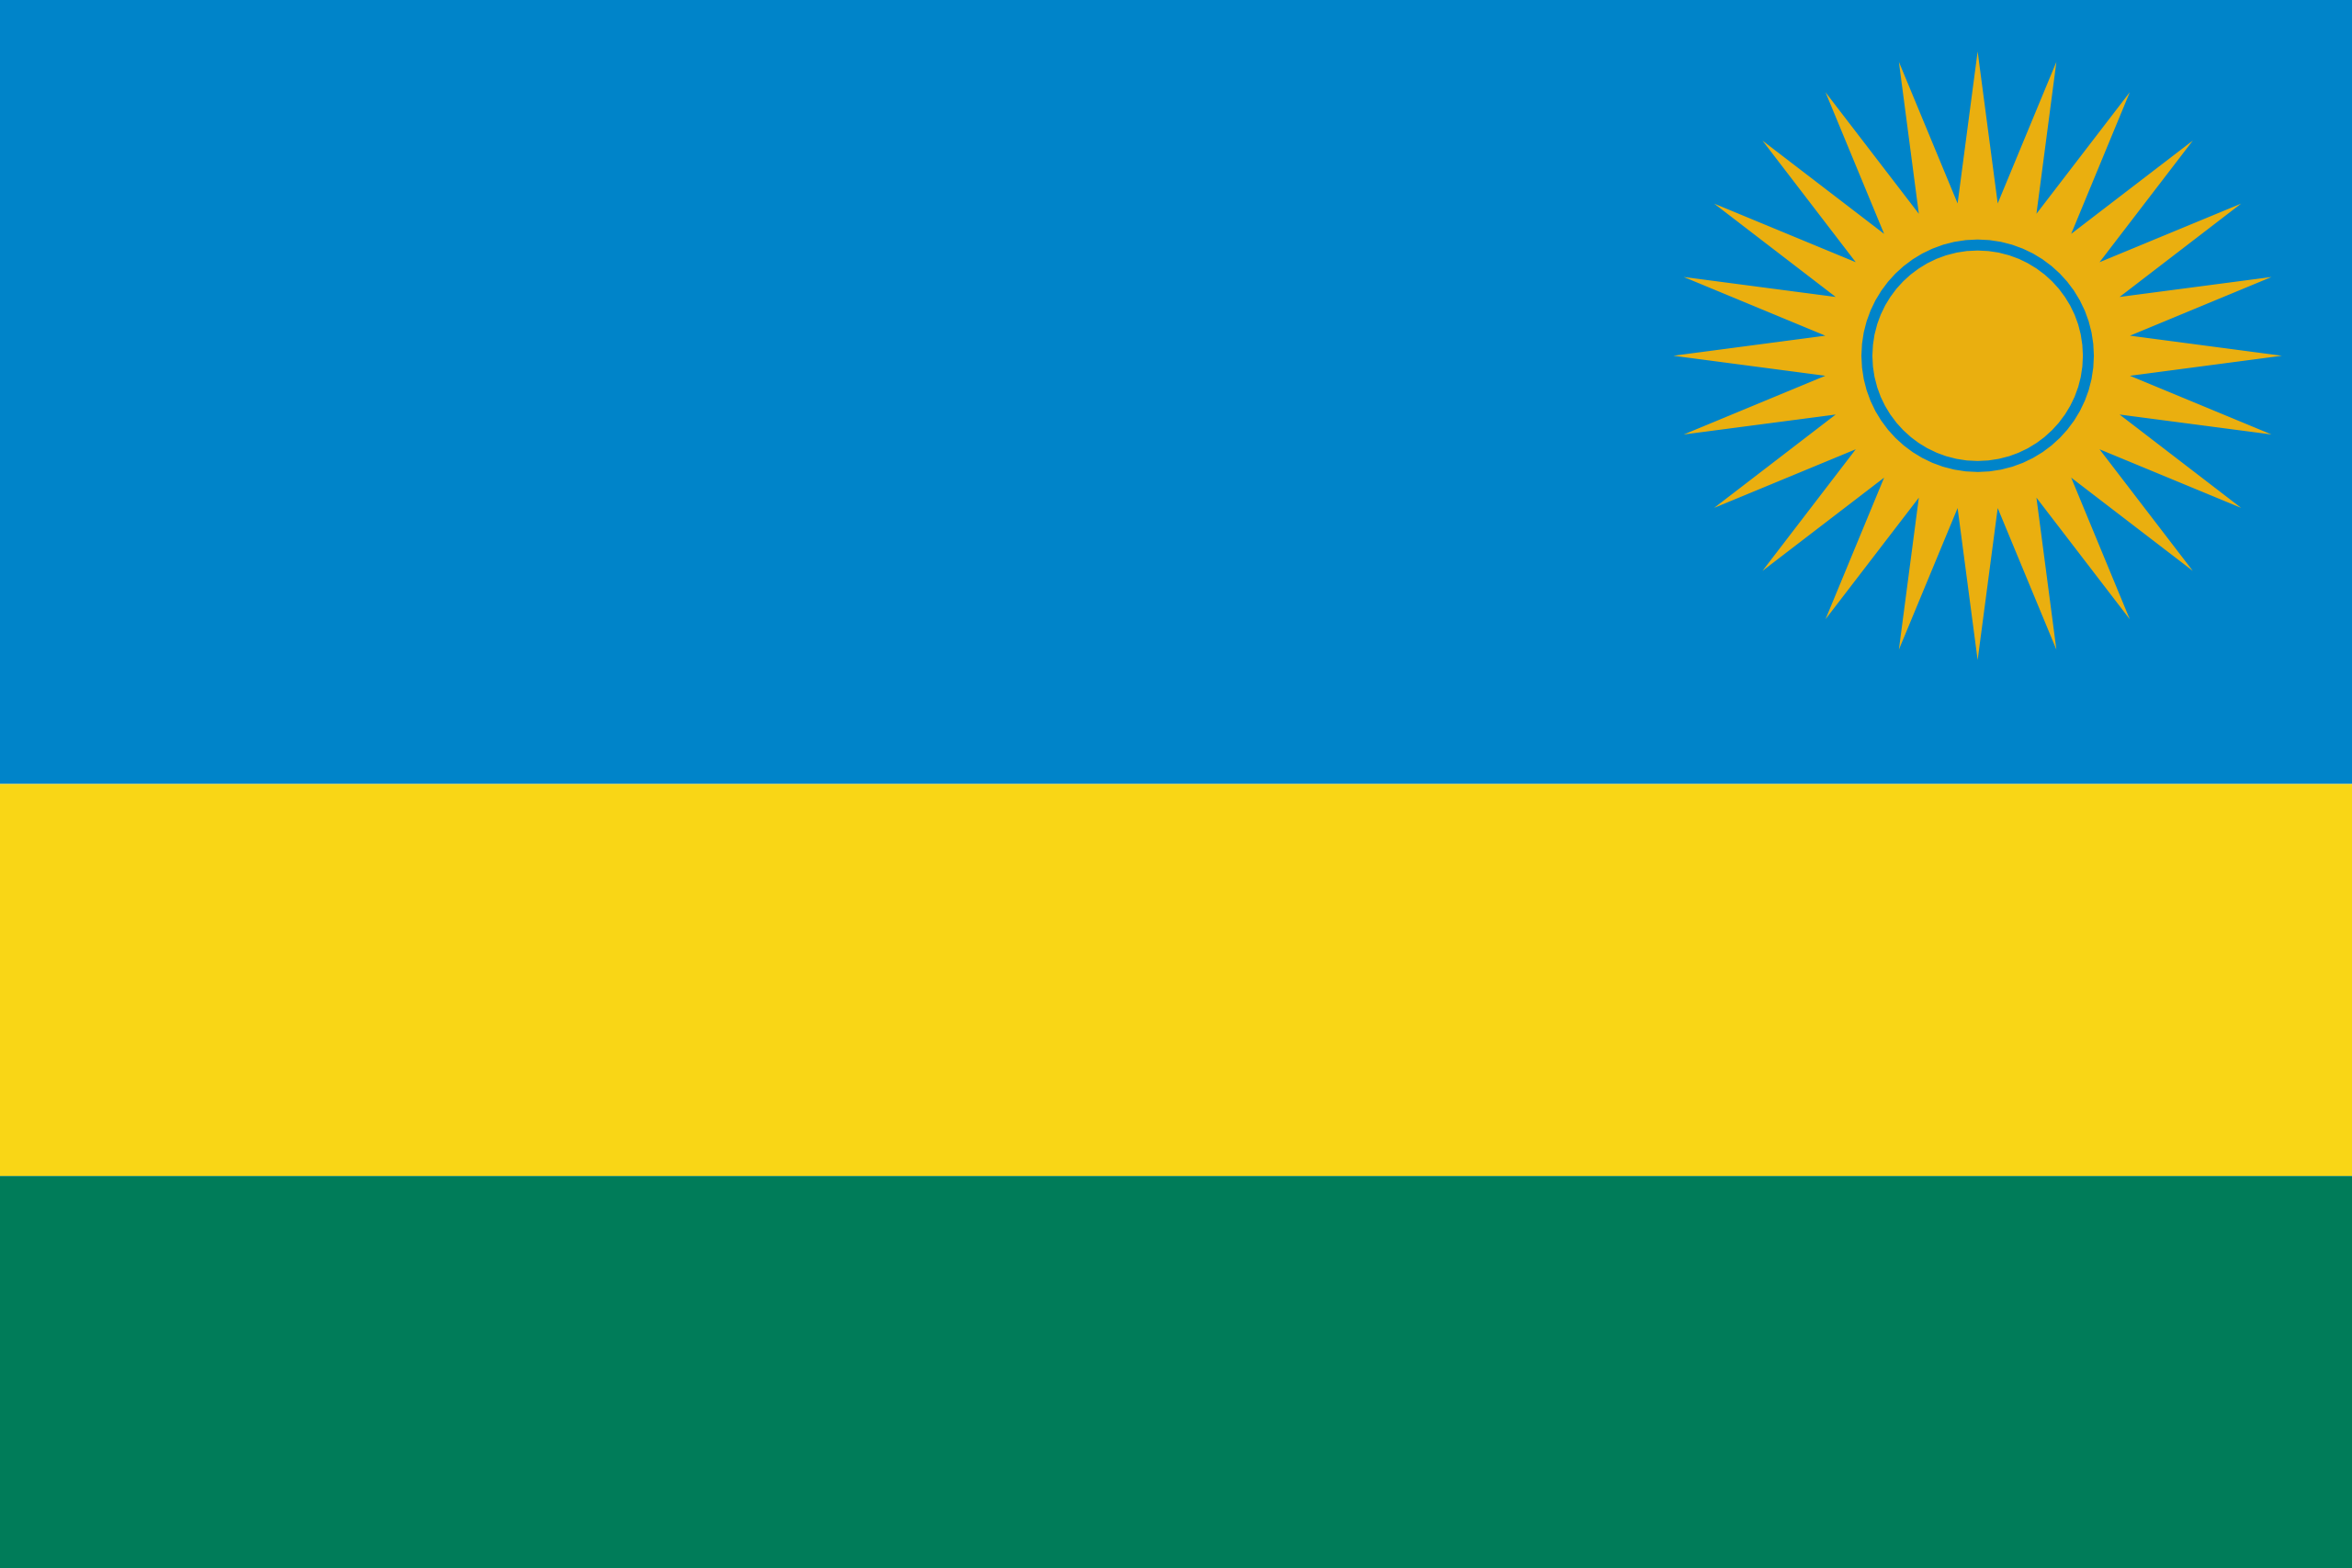 Blue and Yellow Capital M Logo - Rwanda. Flags of countries